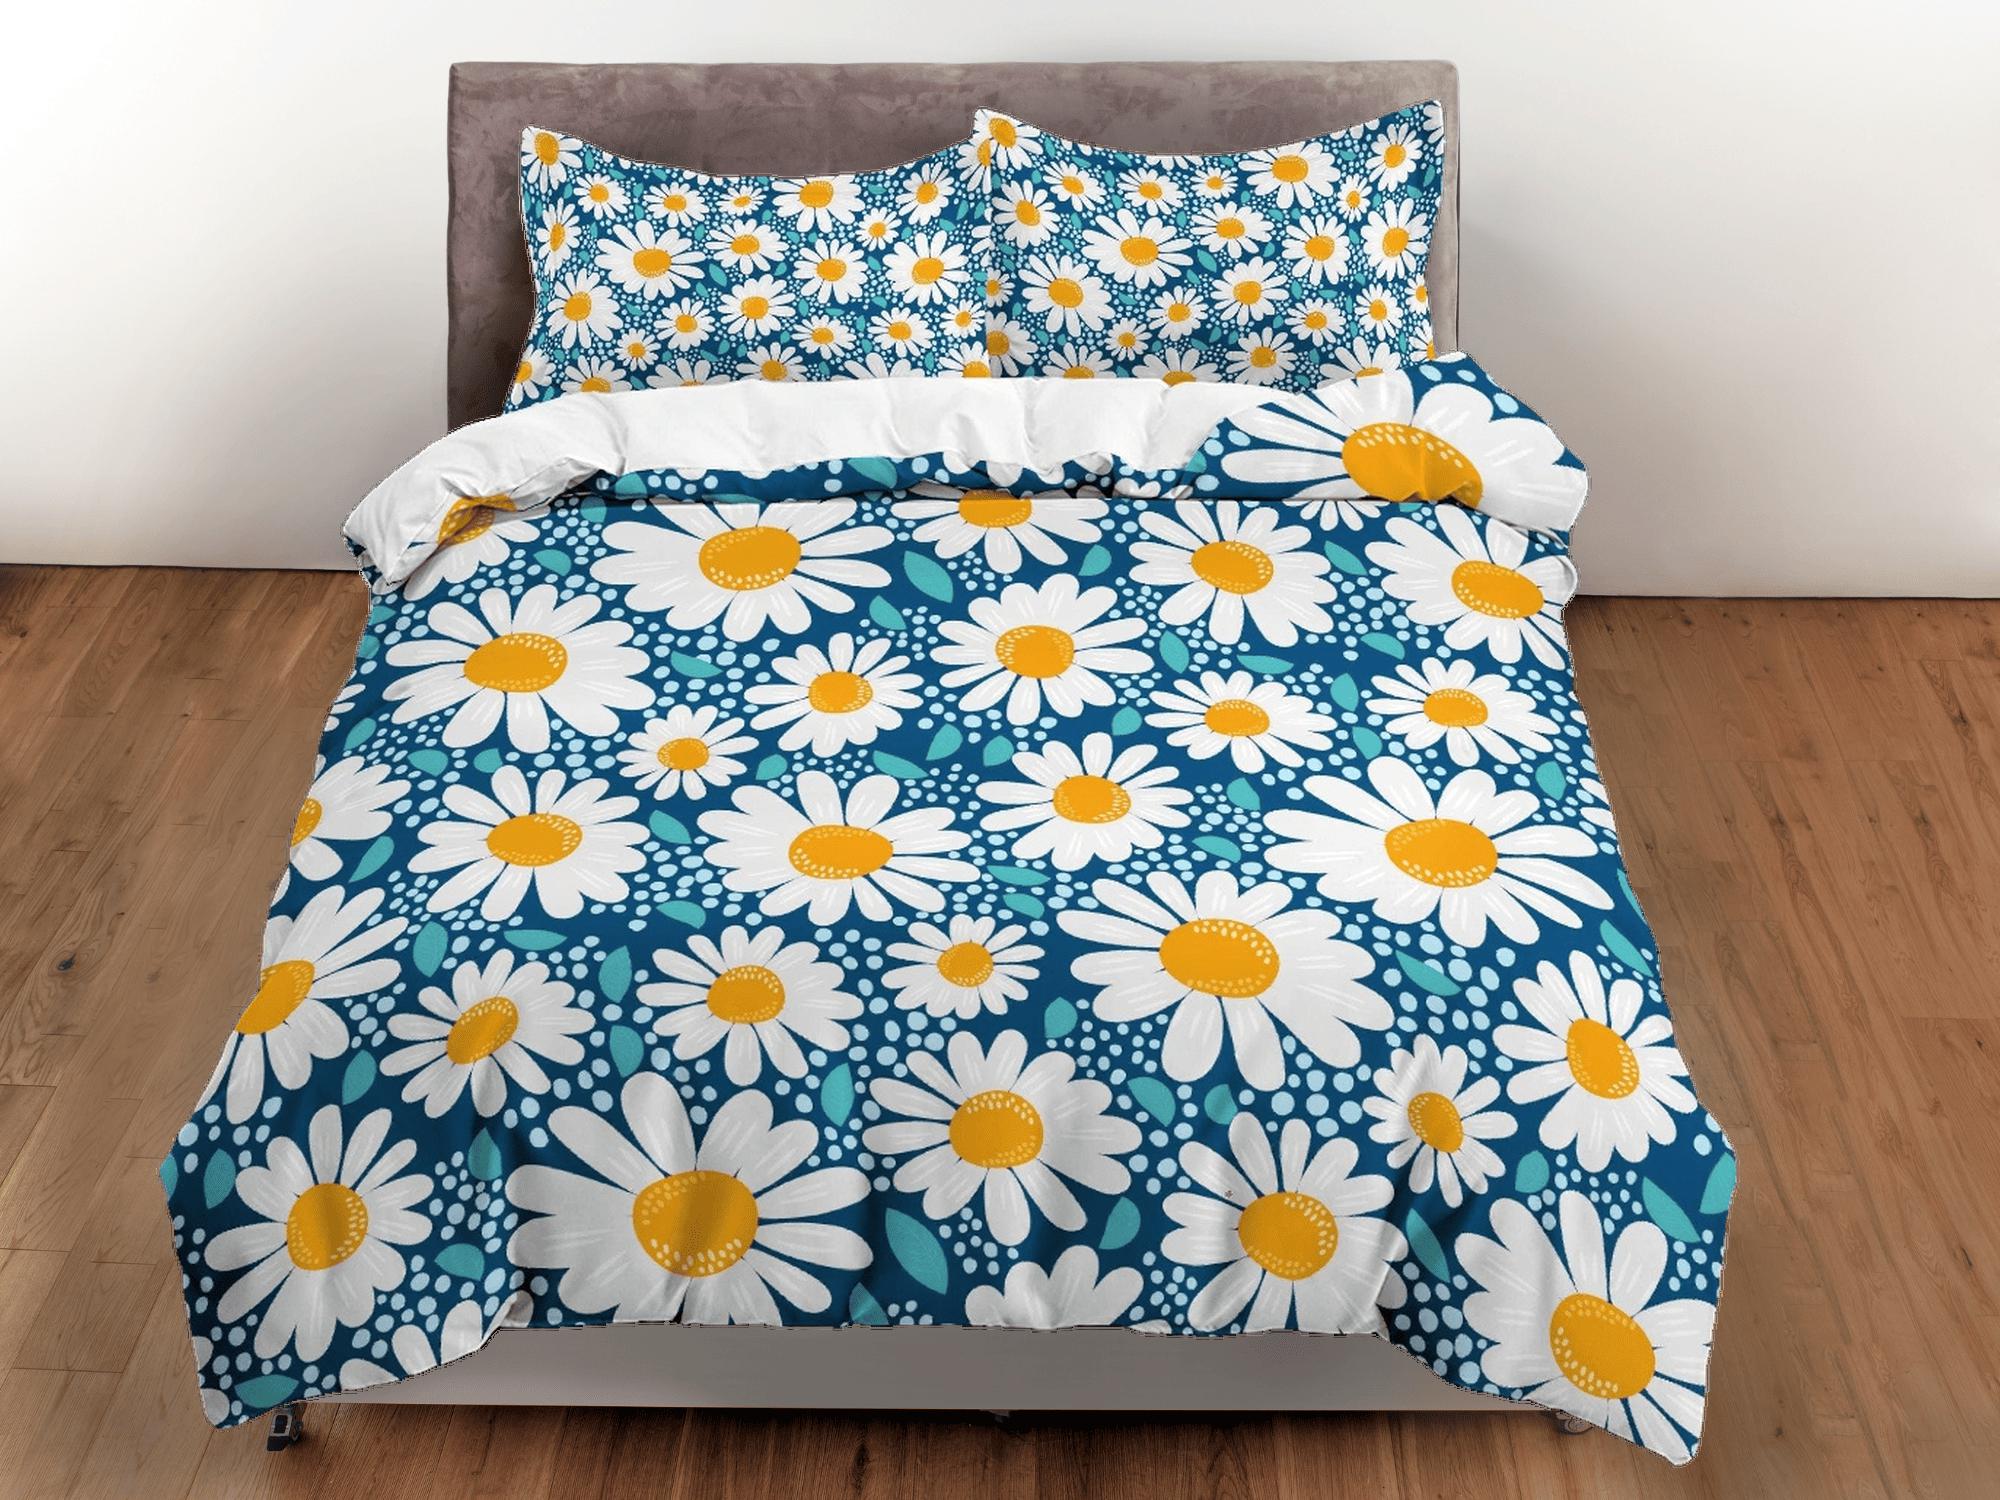 daintyduvet Daisy floral blue duvet cover colorful bedding, teen girl bedroom, baby girl crib bedding boho maximalist bedspread aesthetic bedding